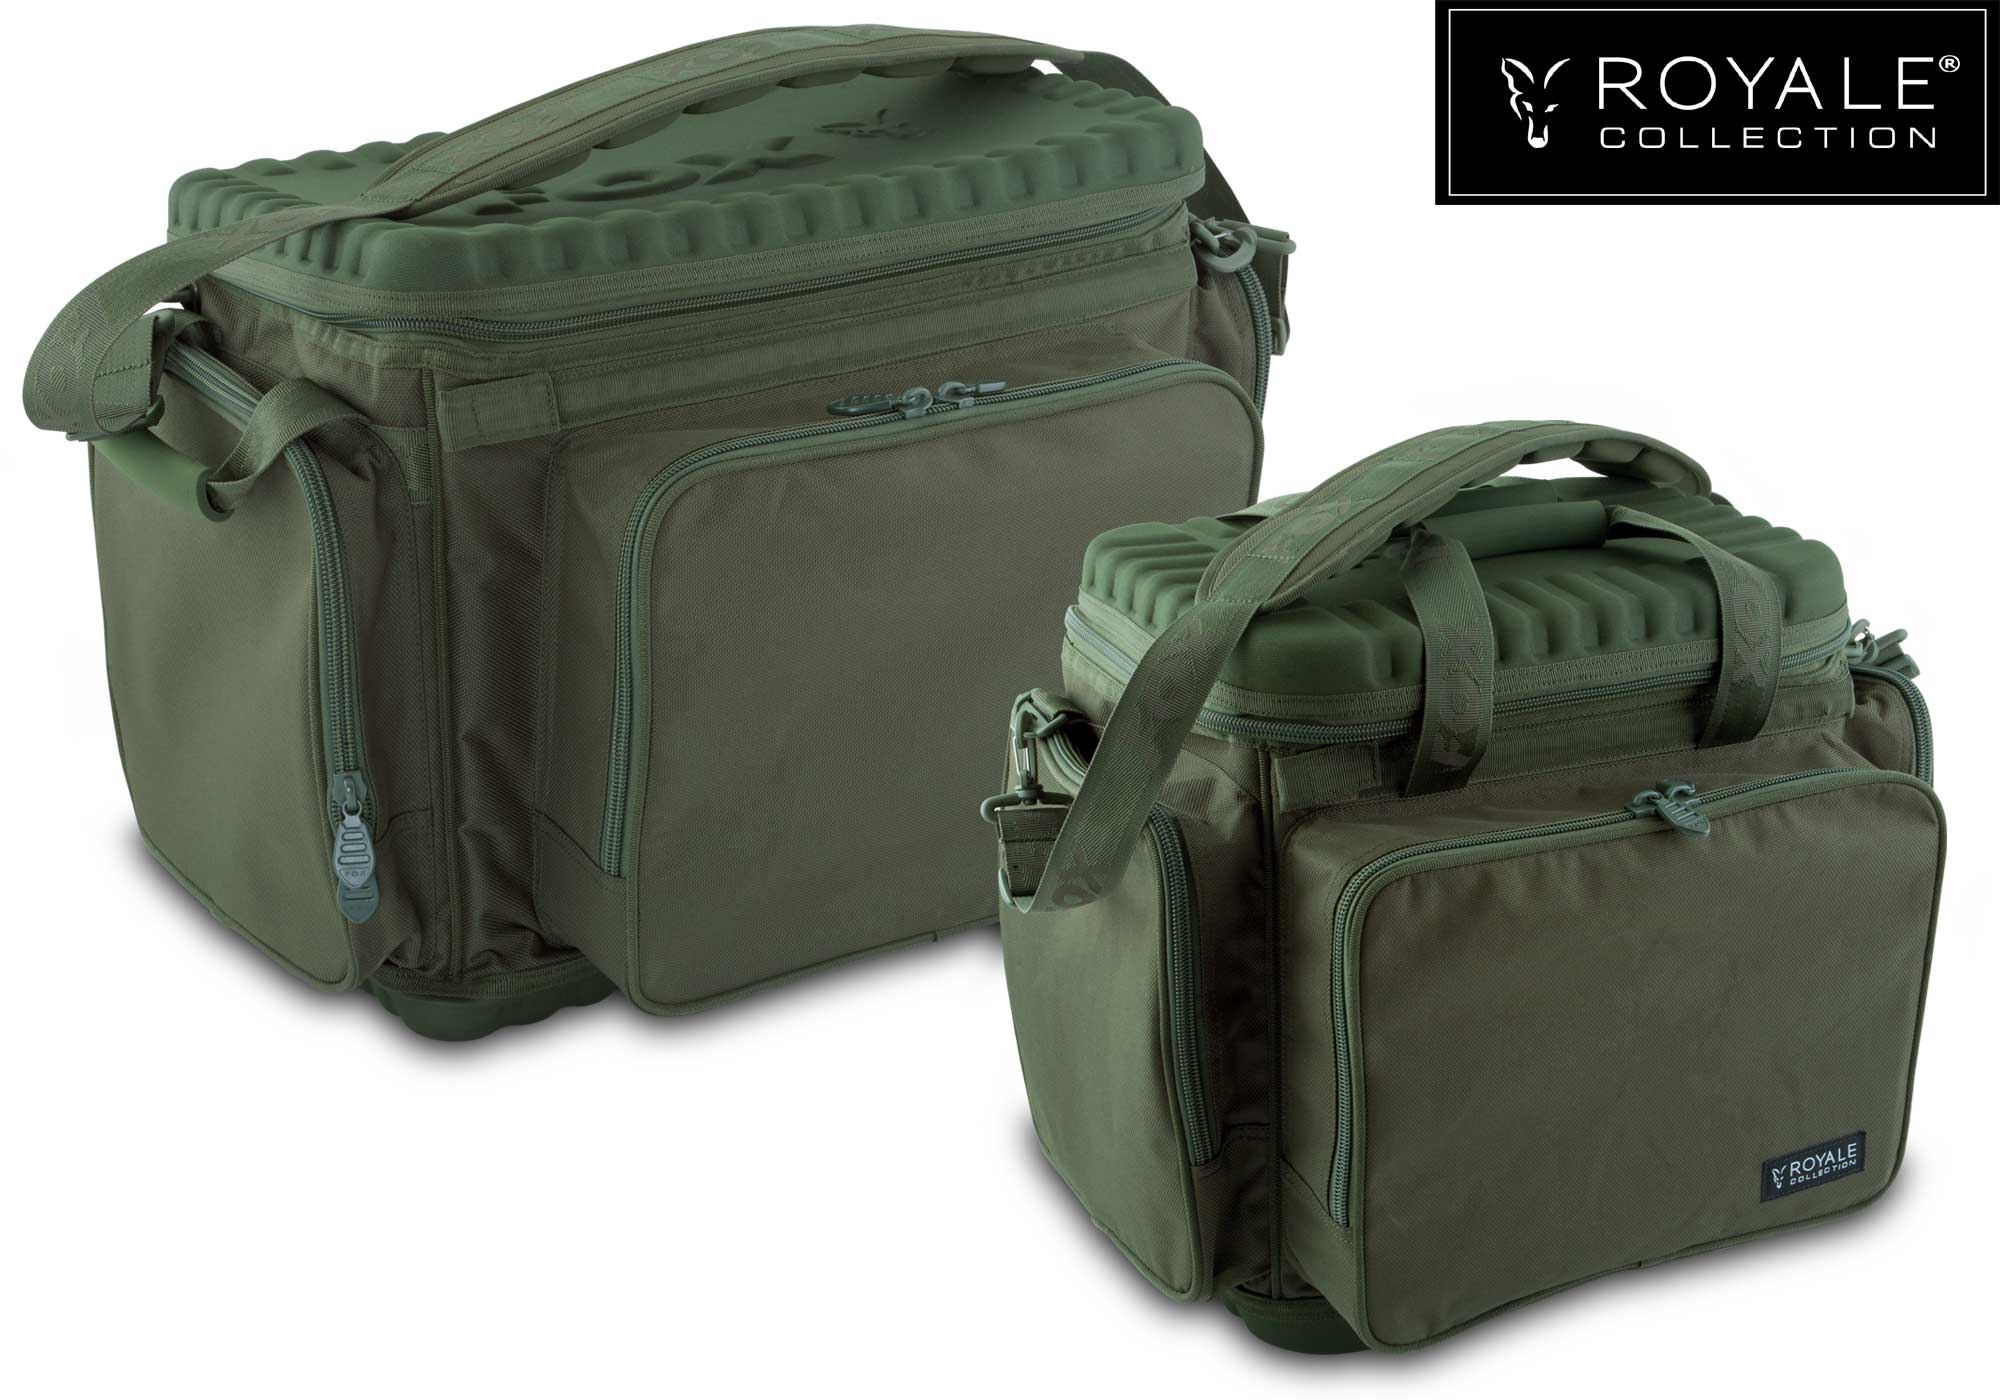 Сумка fox. Сумка Fox Royale clu189. Fox Royale Carryall сумка. Сумка Fox Royale Bait Bag. Сумка Fox FX Barrow Bag large.